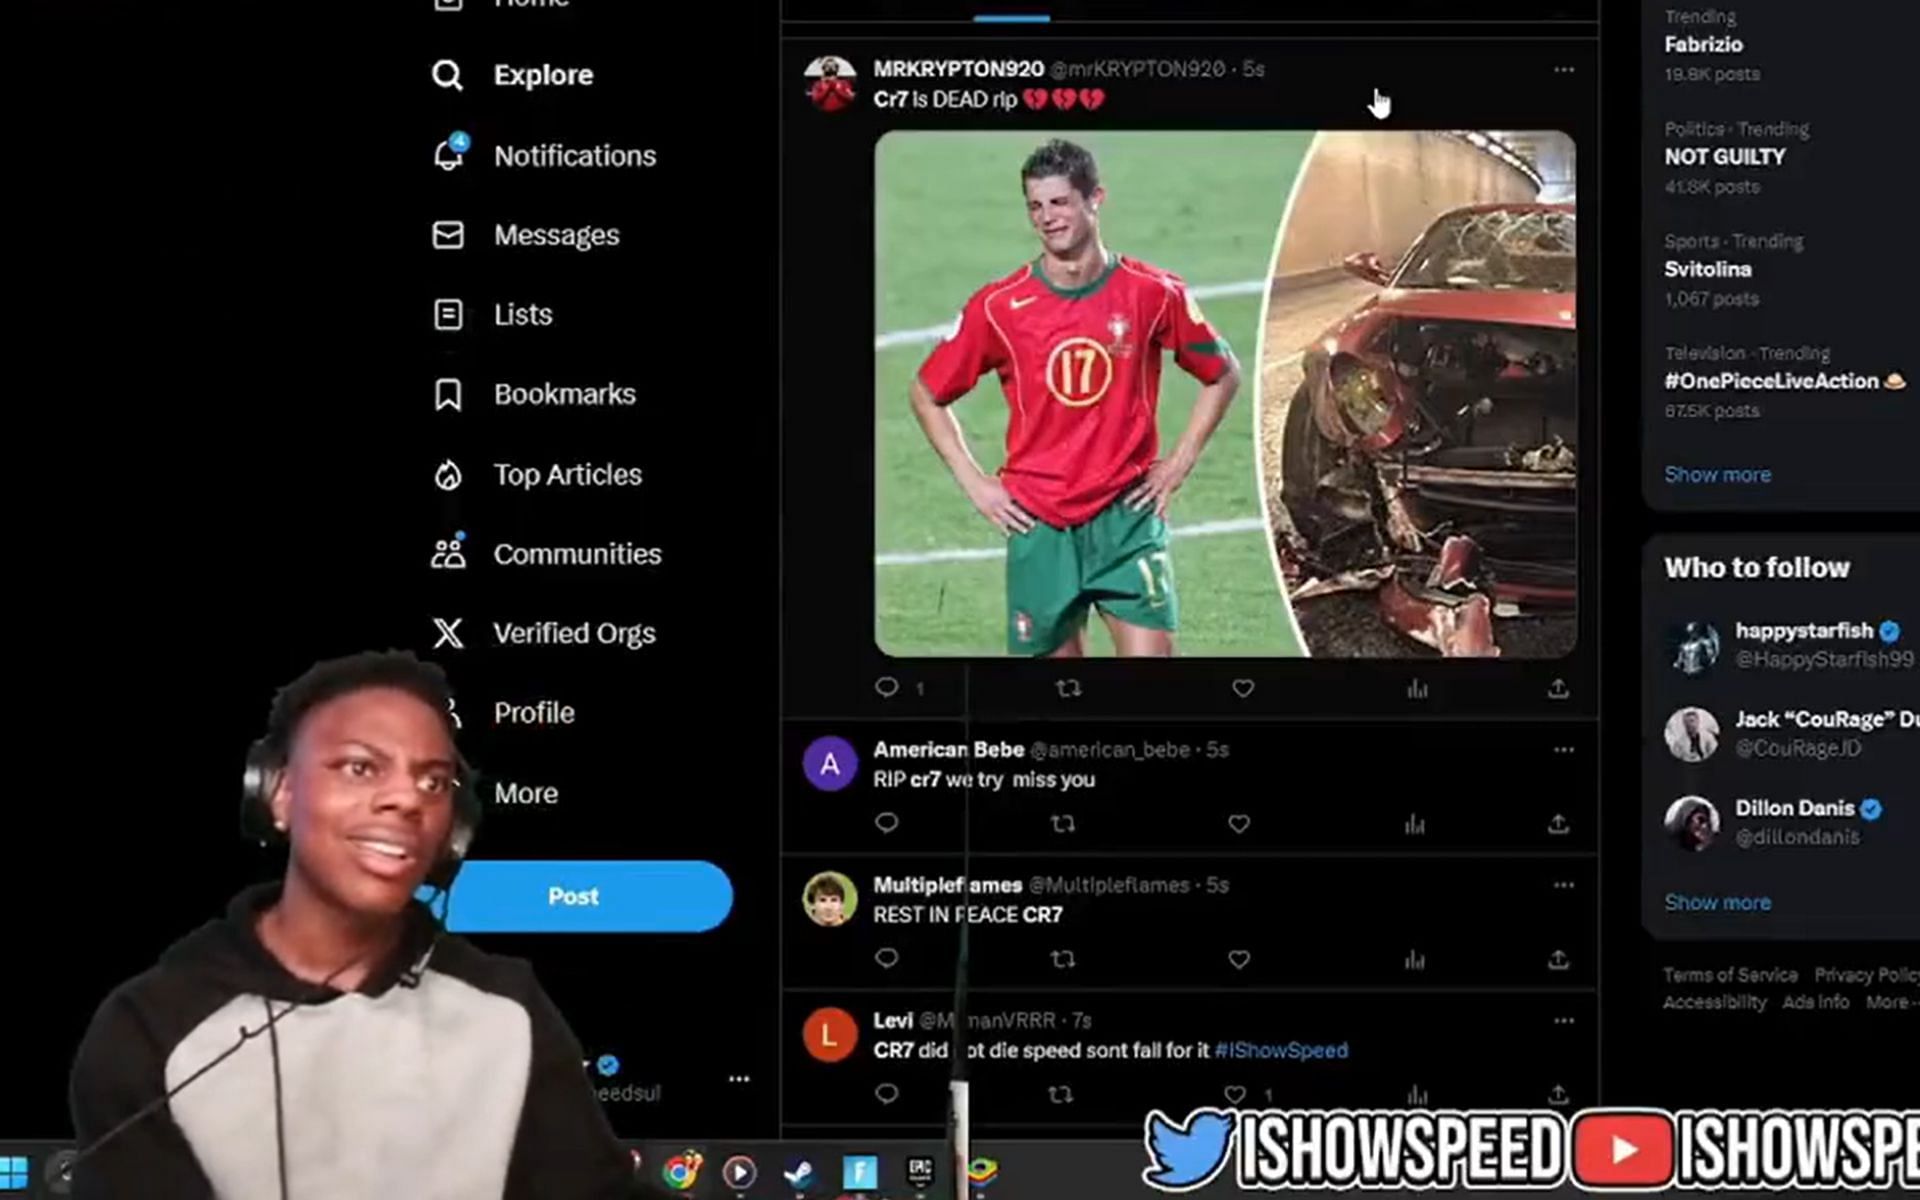 IShowSpeed reacts to fans trolling him by saying that Ronaldo passed away (Image via Drama Alert/Twitter)